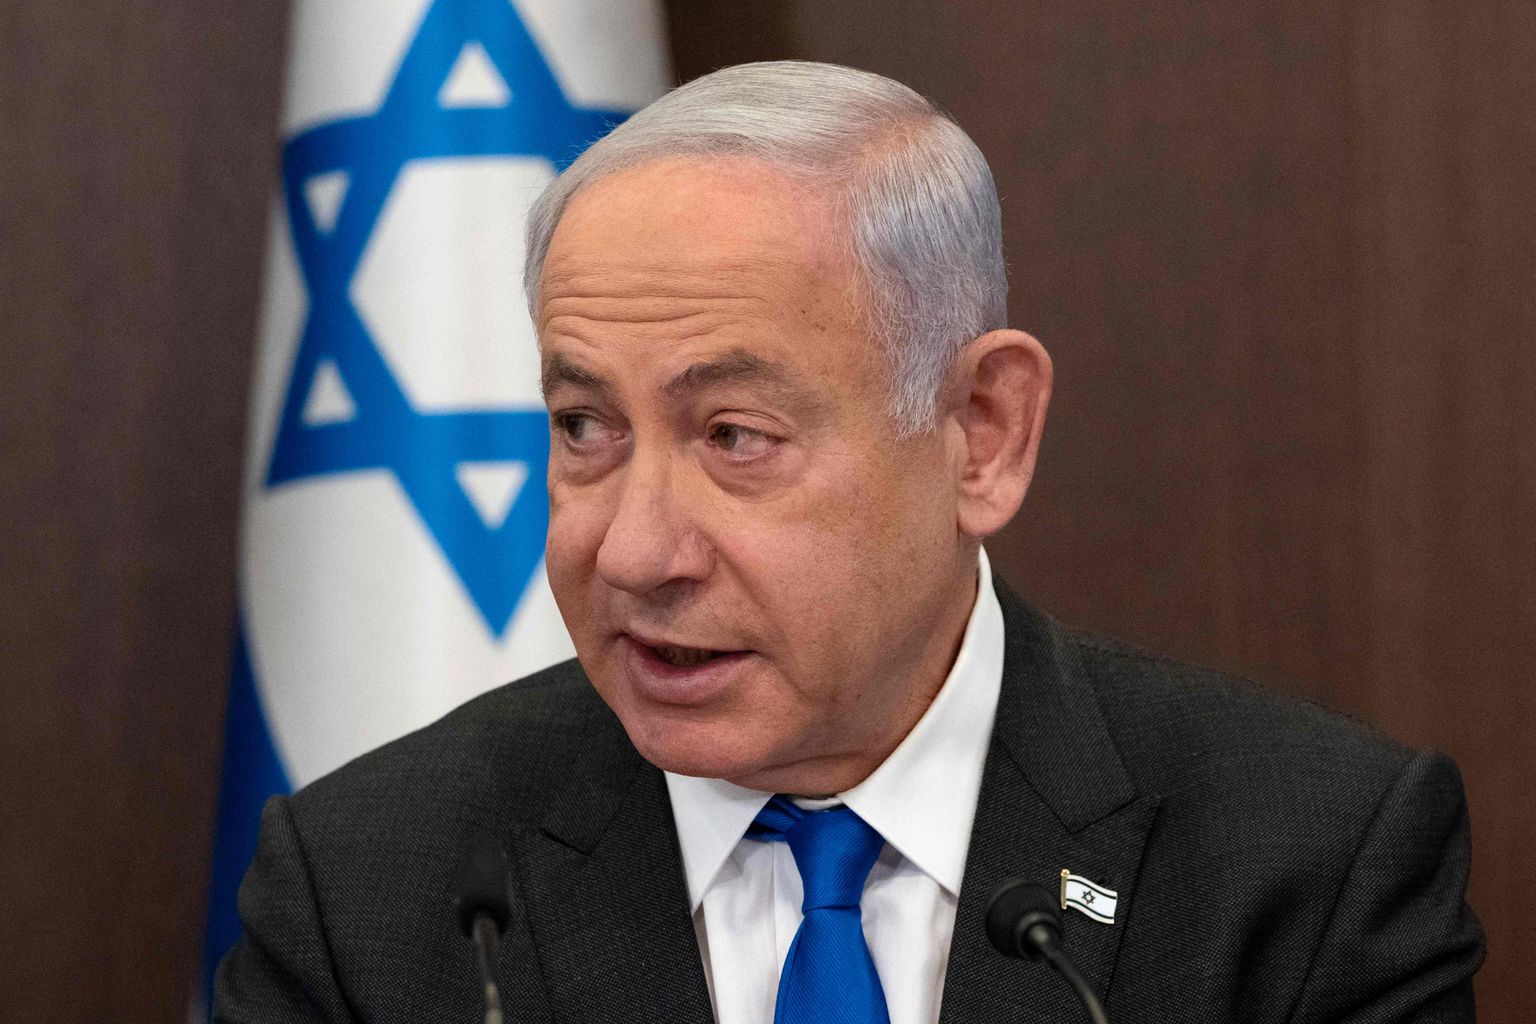 Israels Prime Minister Benjamin Netanyahu chairs the weekly cabinet meeting in Jerusalem, on March 12, 2023. (Photo by Maya Alleruzzo / POOL / AFP)